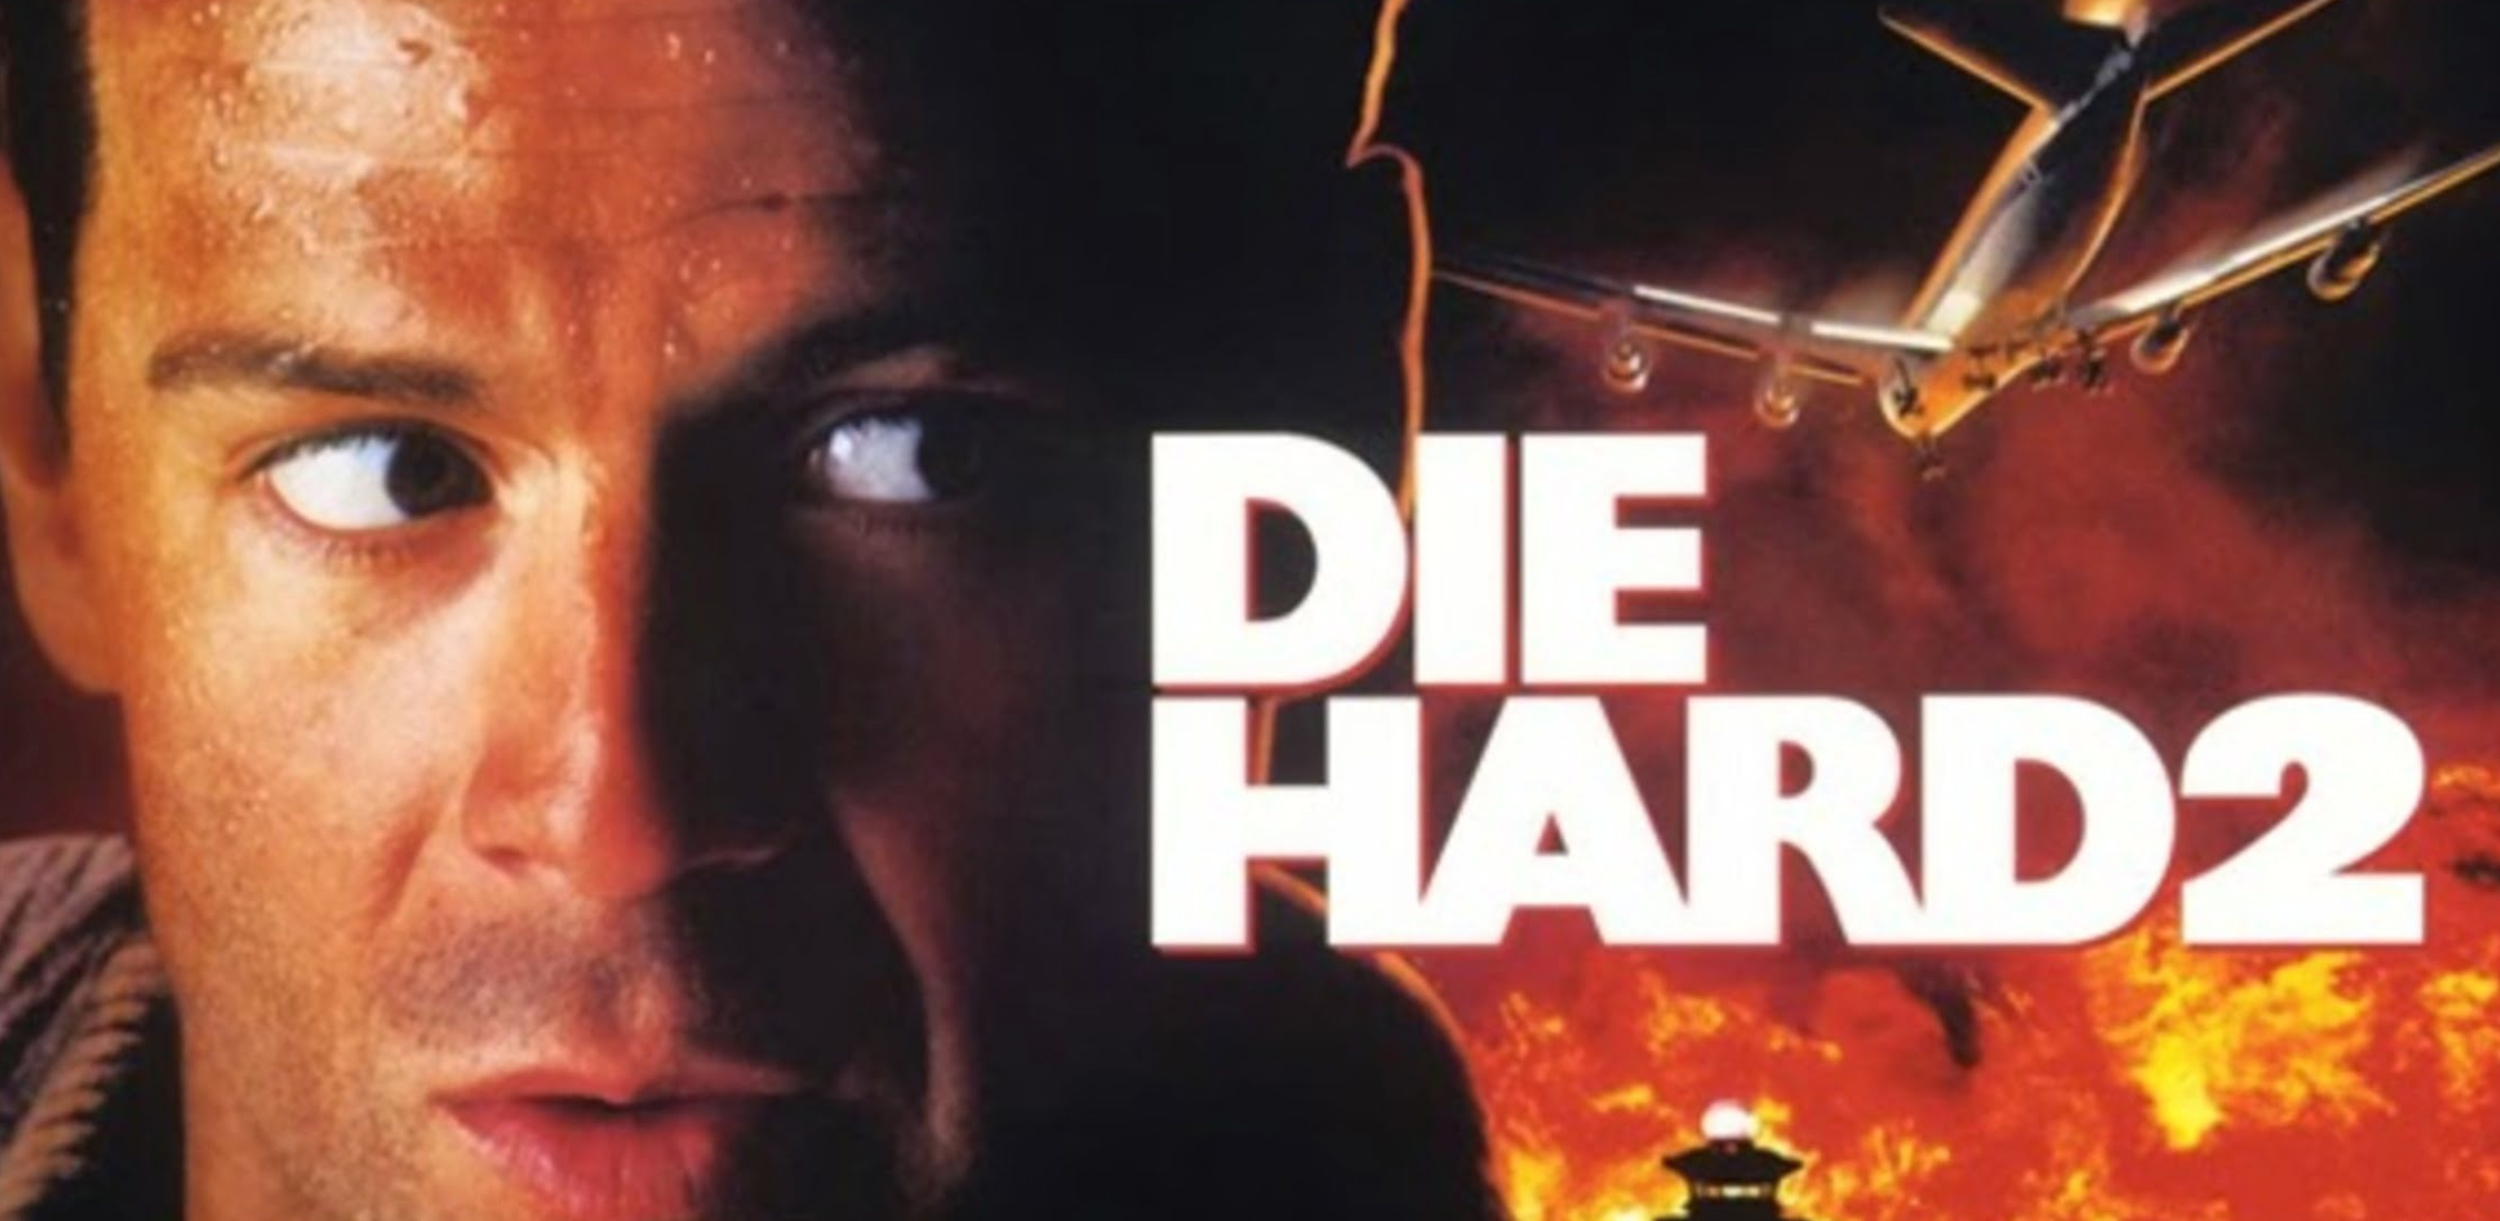 Die Hard 2, Bruce Willis wife, Net worth, Age, 2500x1230 Dual Screen Desktop